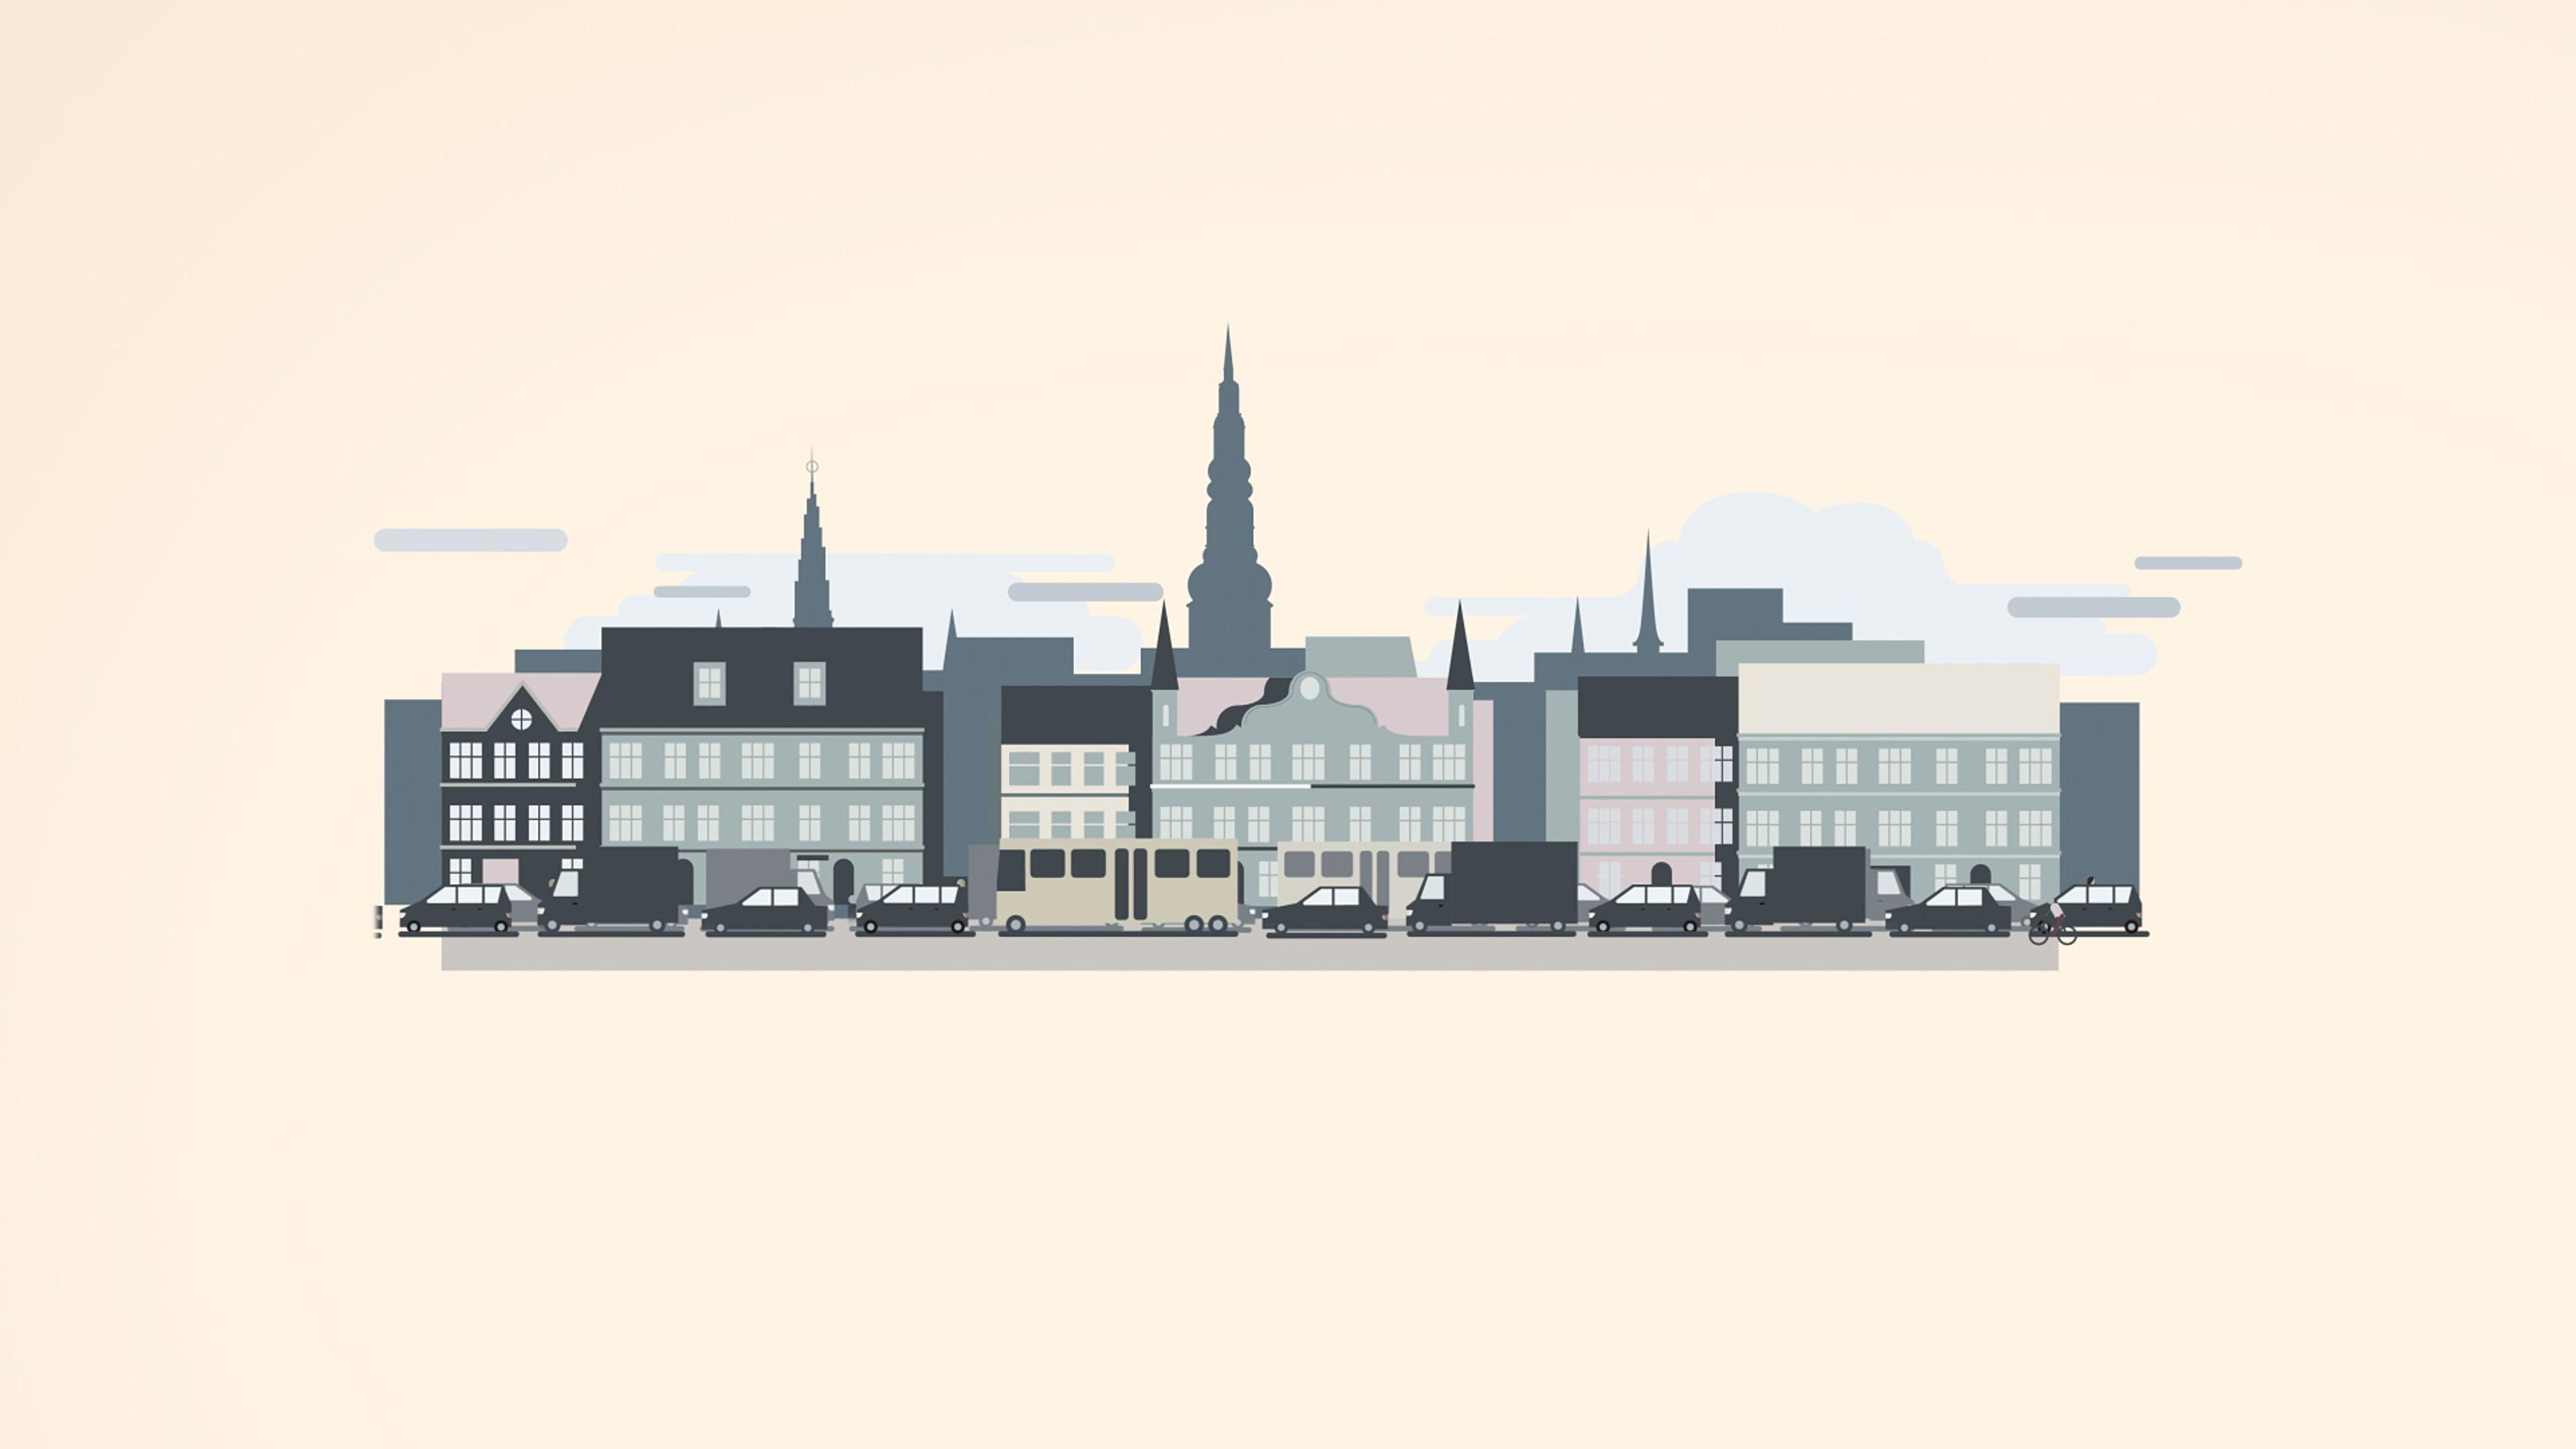 copenhagen city landscape made in vector style